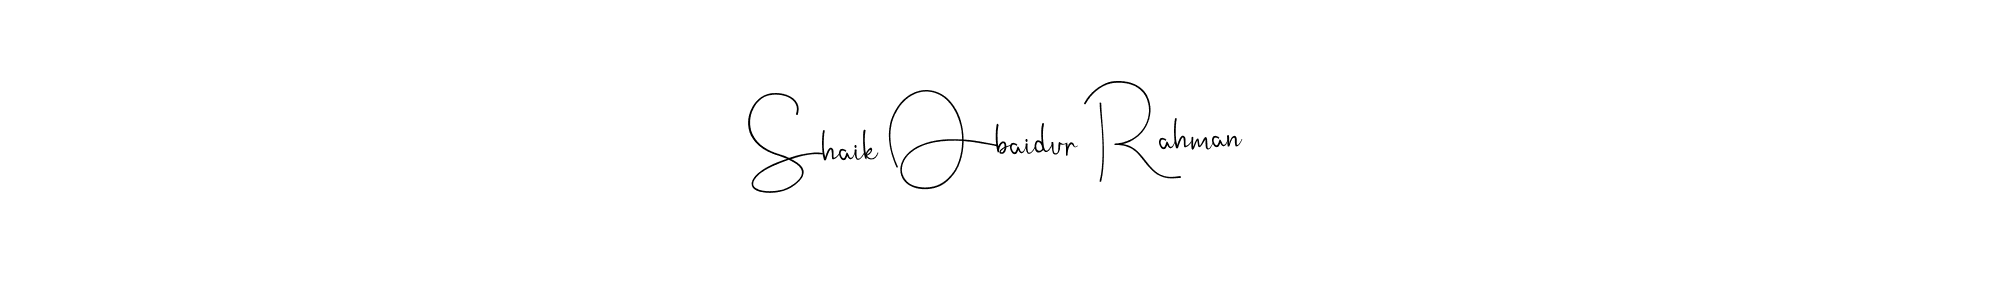 How to Draw Shaik Obaidur Rahman signature style? Andilay-7BmLP is a latest design signature styles for name Shaik Obaidur Rahman. Shaik Obaidur Rahman signature style 4 images and pictures png